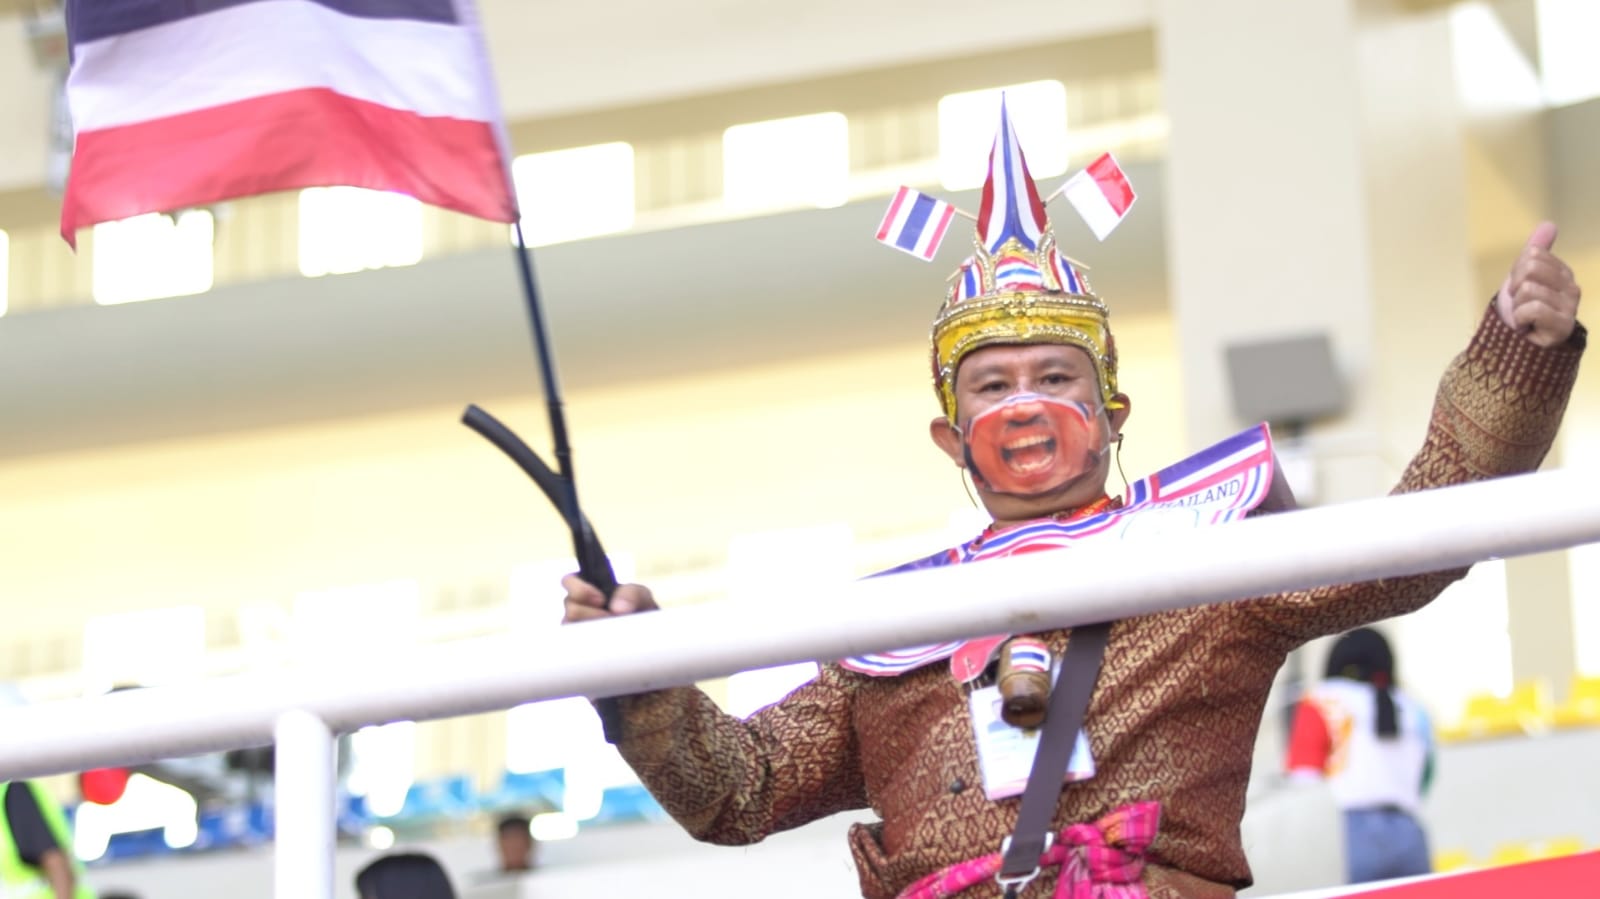 Atlet asal negeri Lumbung Padi Asia Tenggara didukung Little Thailand